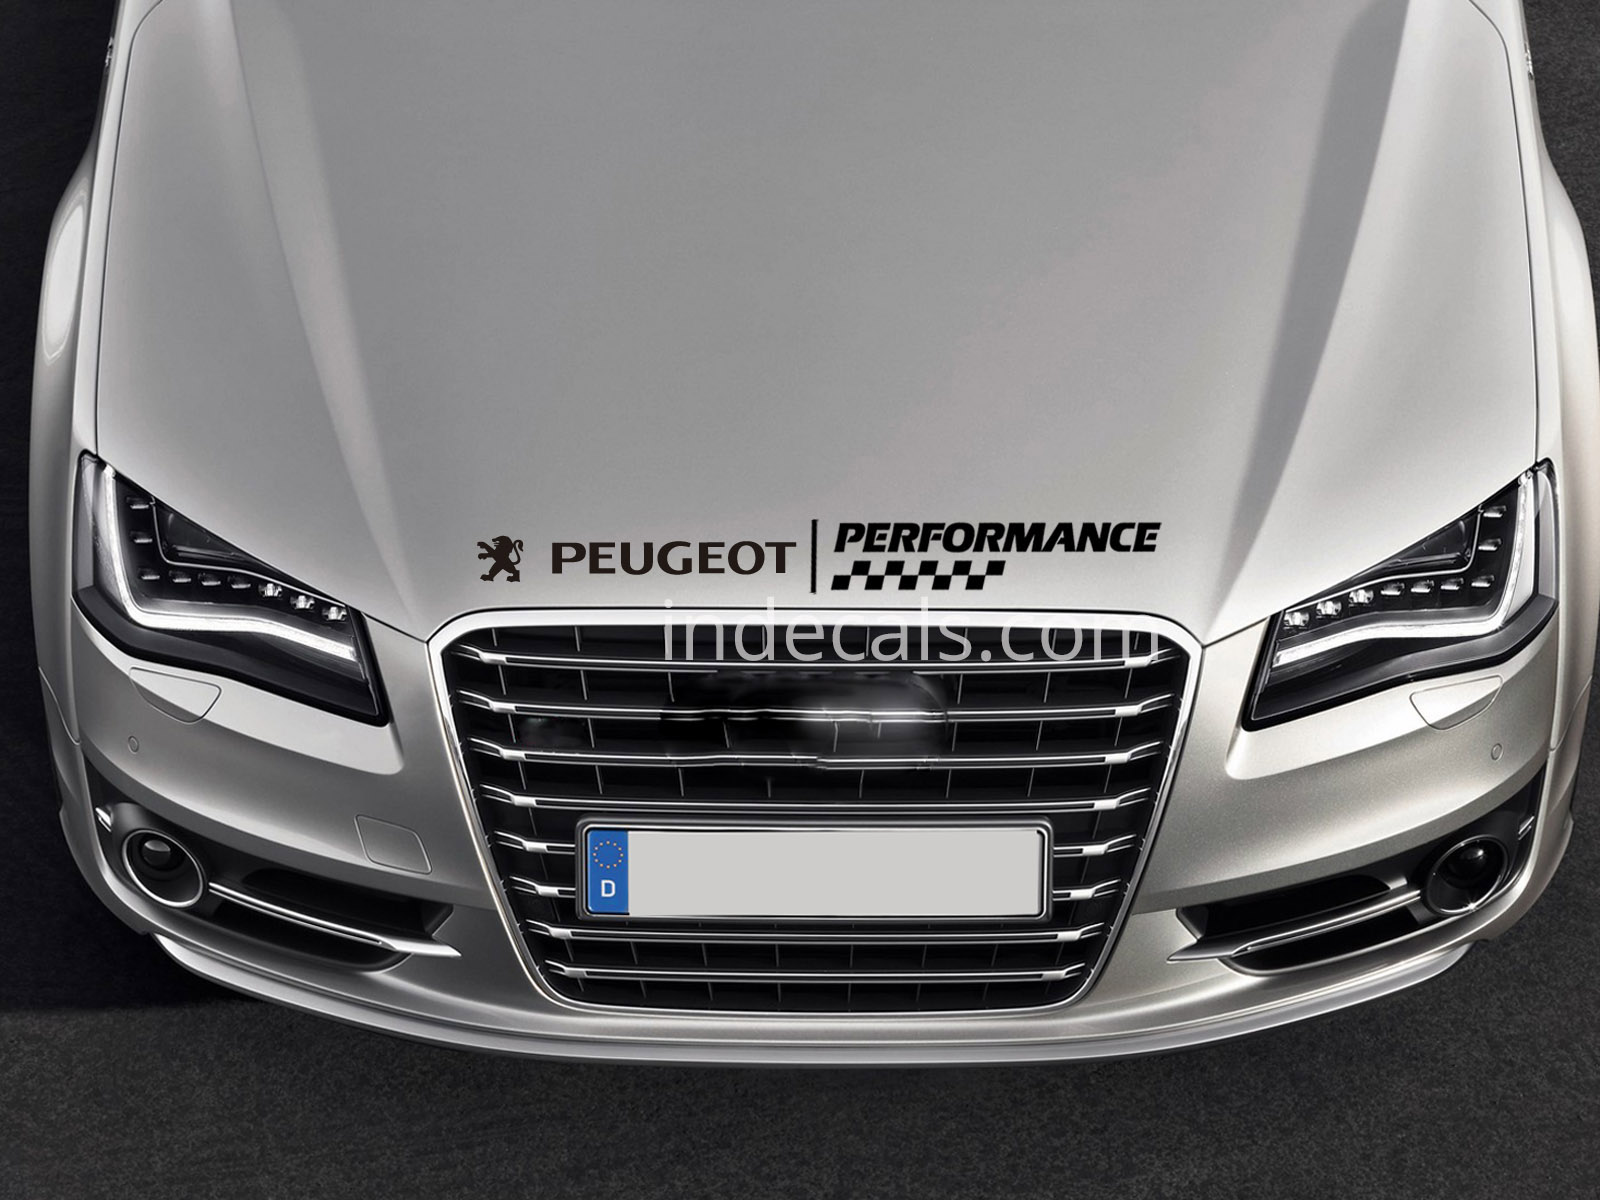 1 x Peugeot Performance Sticker for Bonnet - Black